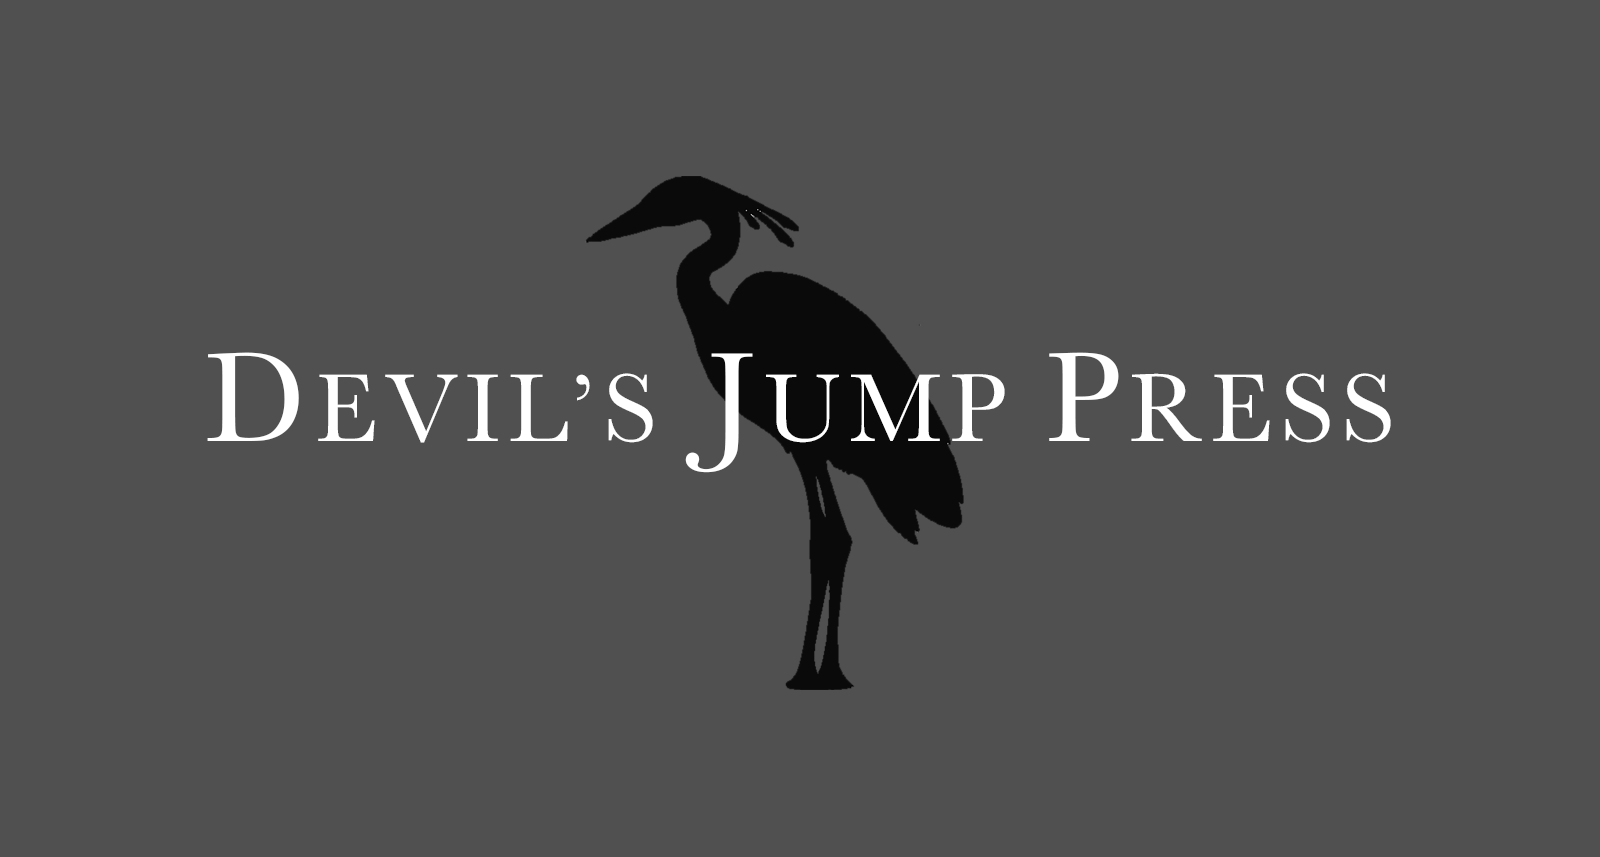 Devils jump